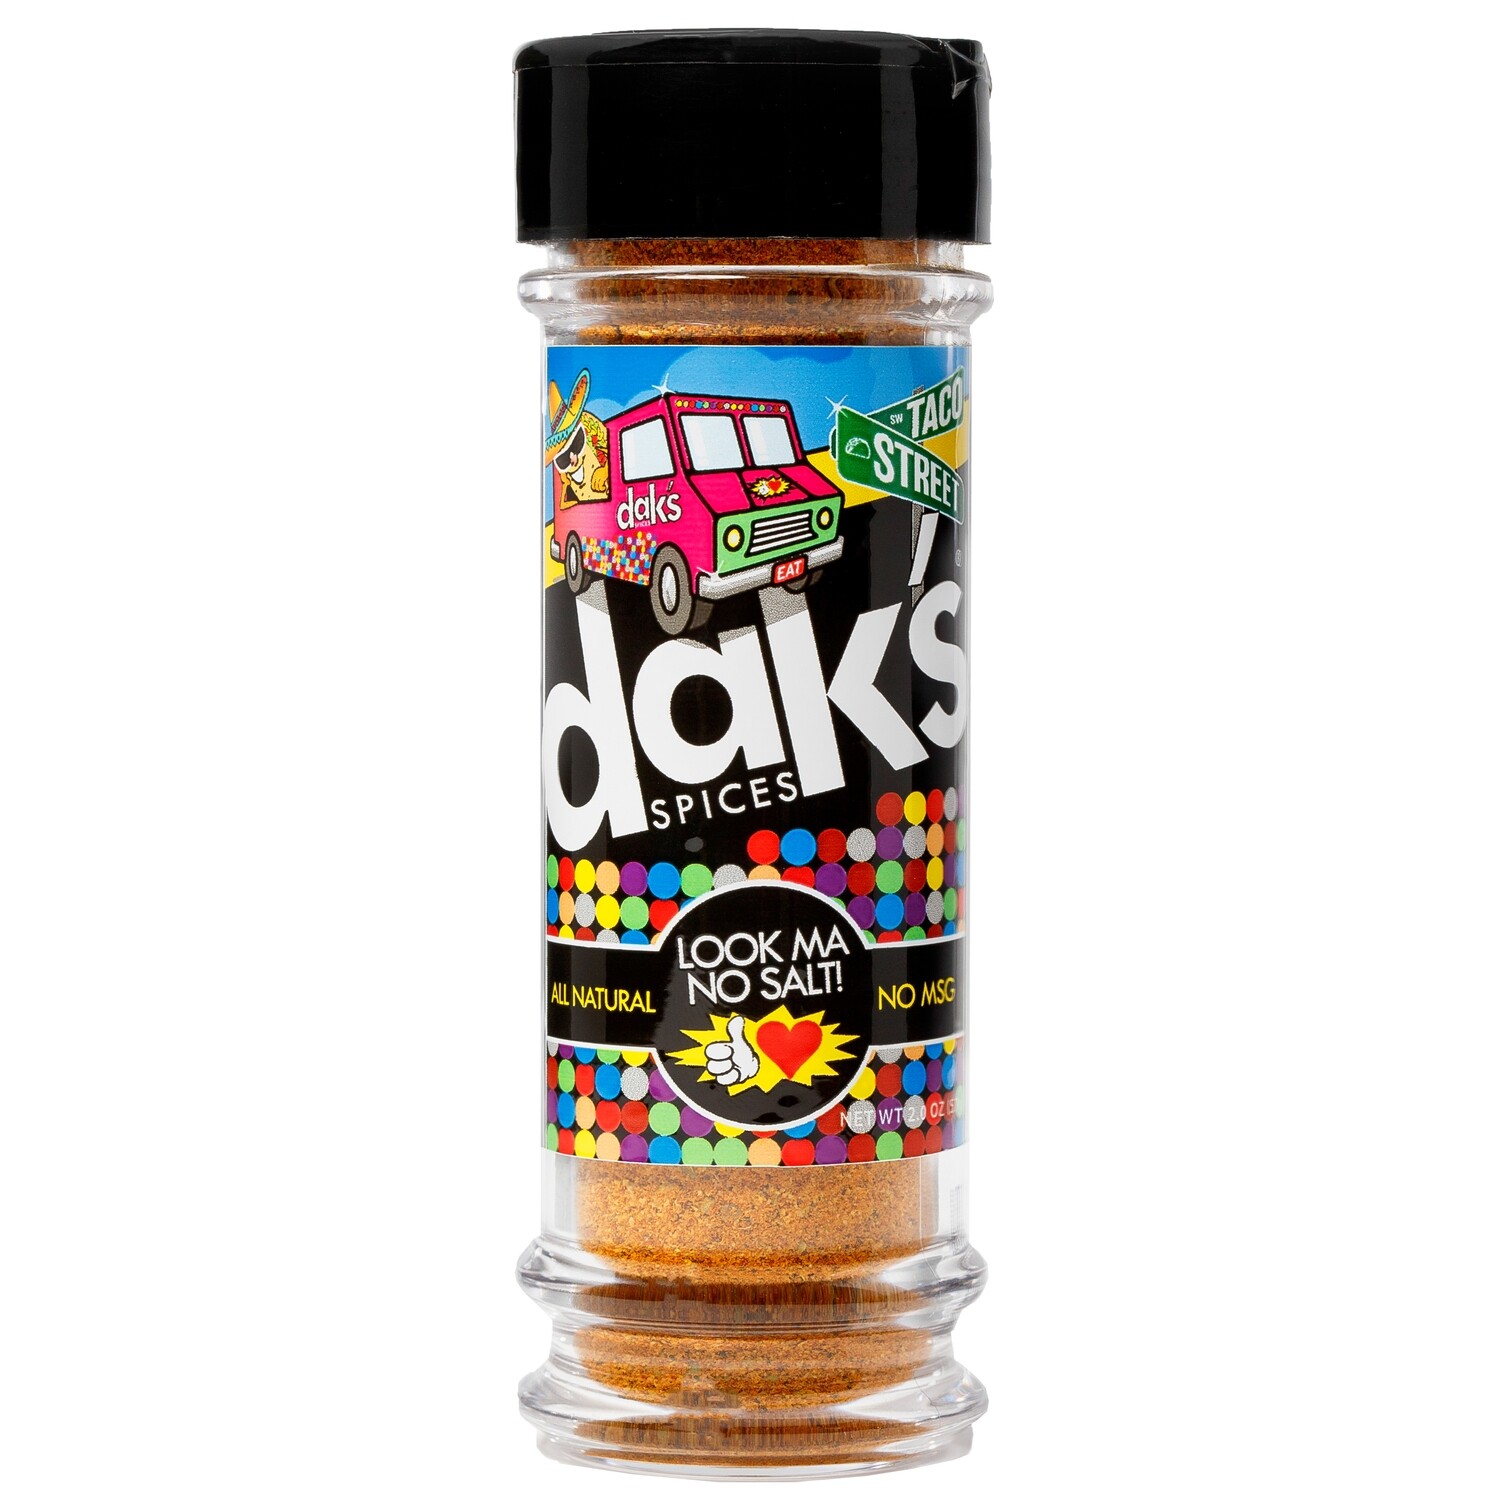 DAK's STREET TACO - SALT FREE seasoning to enhance any meal